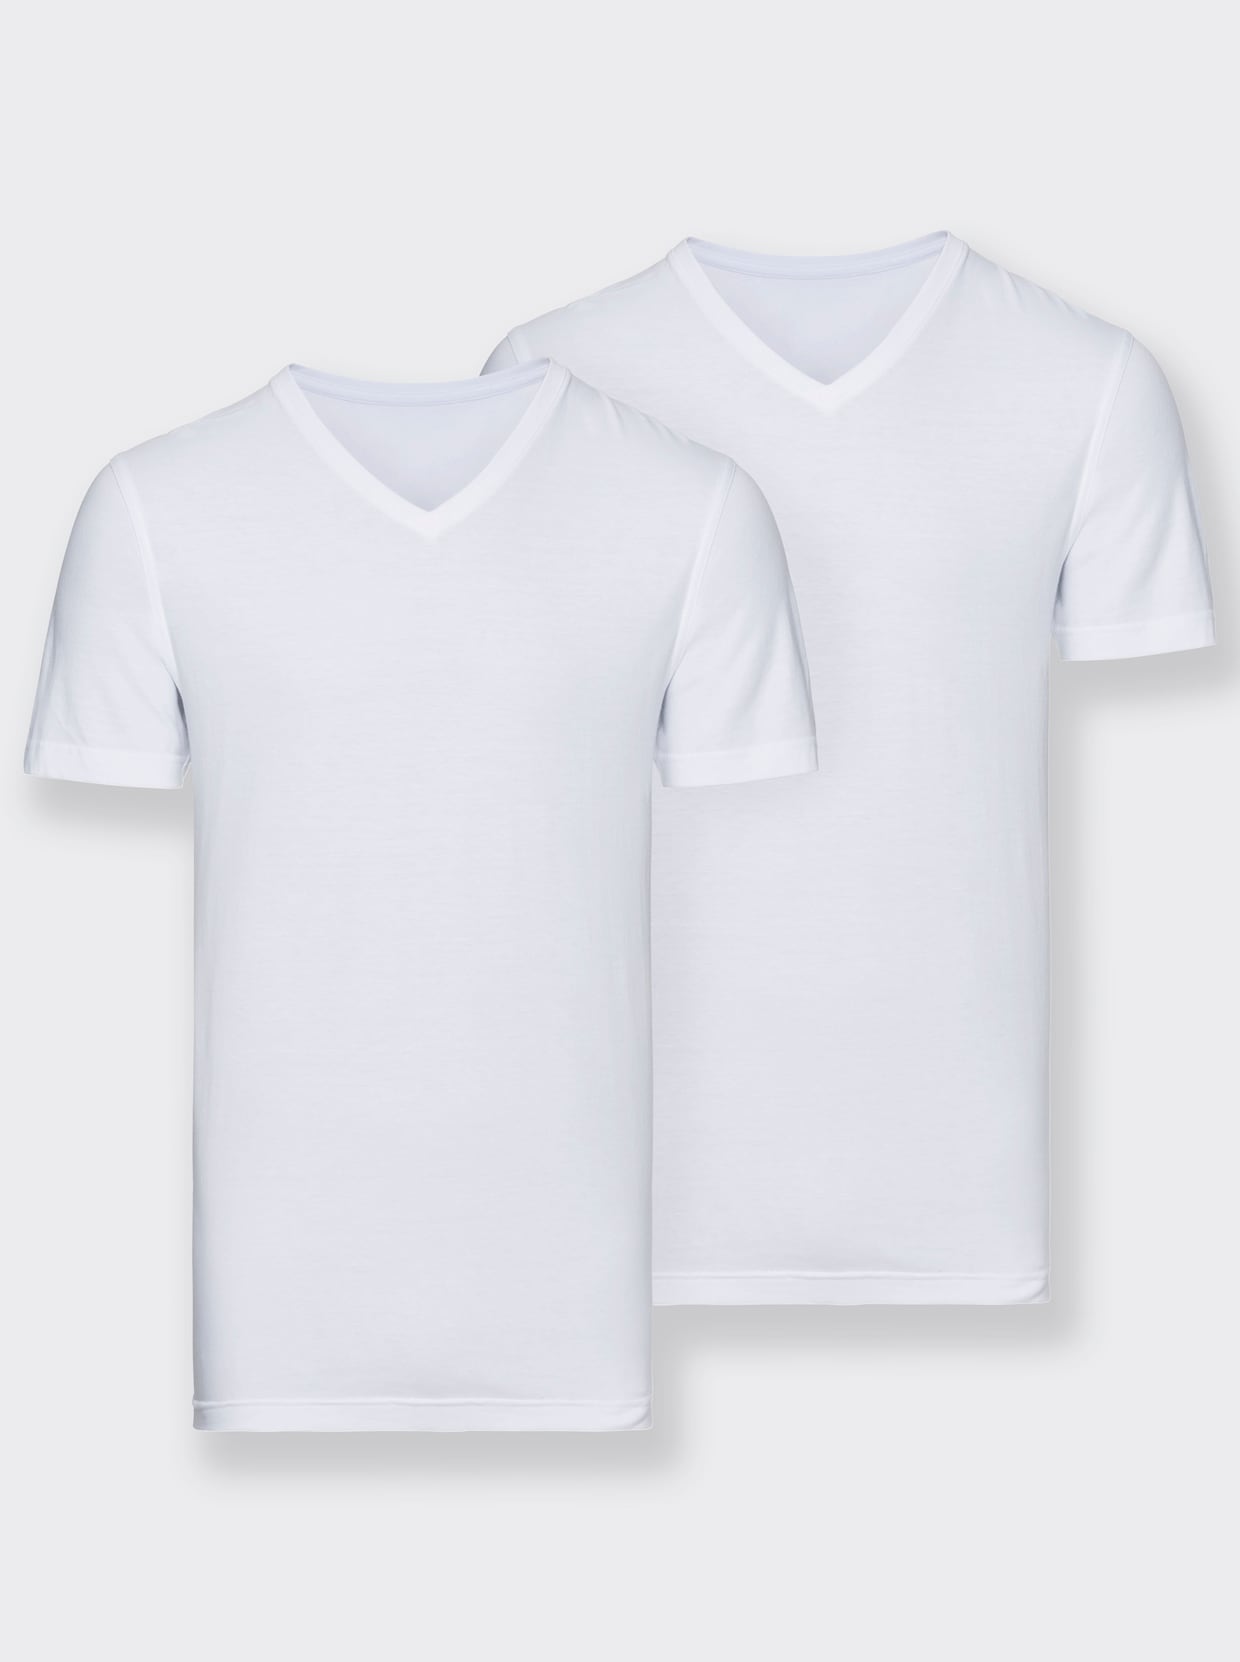 bugatti Shirt - 2 stuks wit